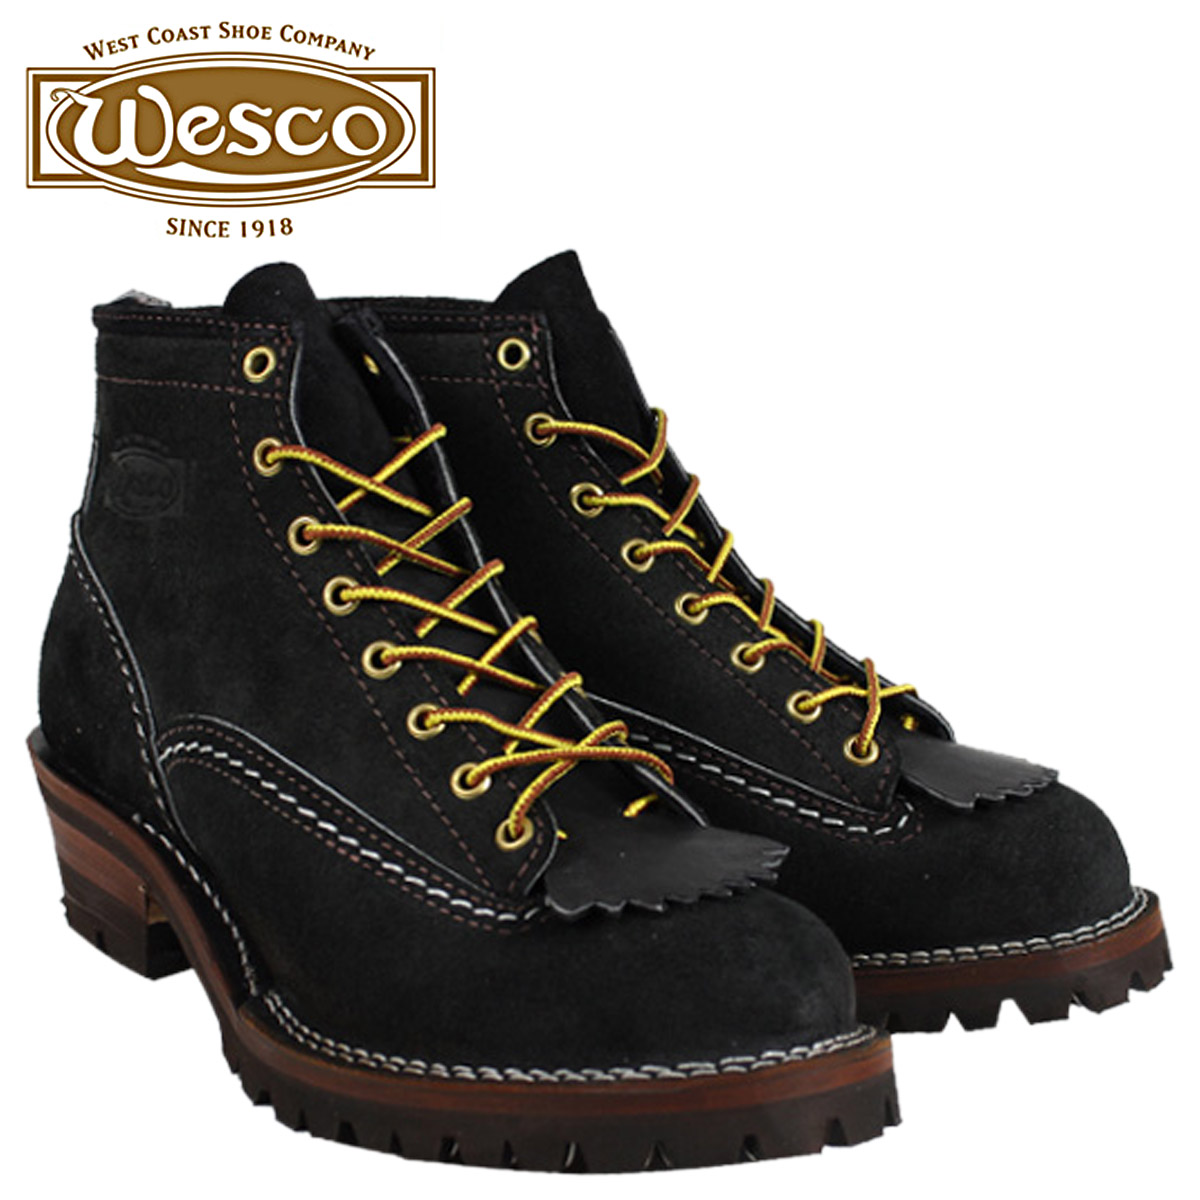 wesco logger boots